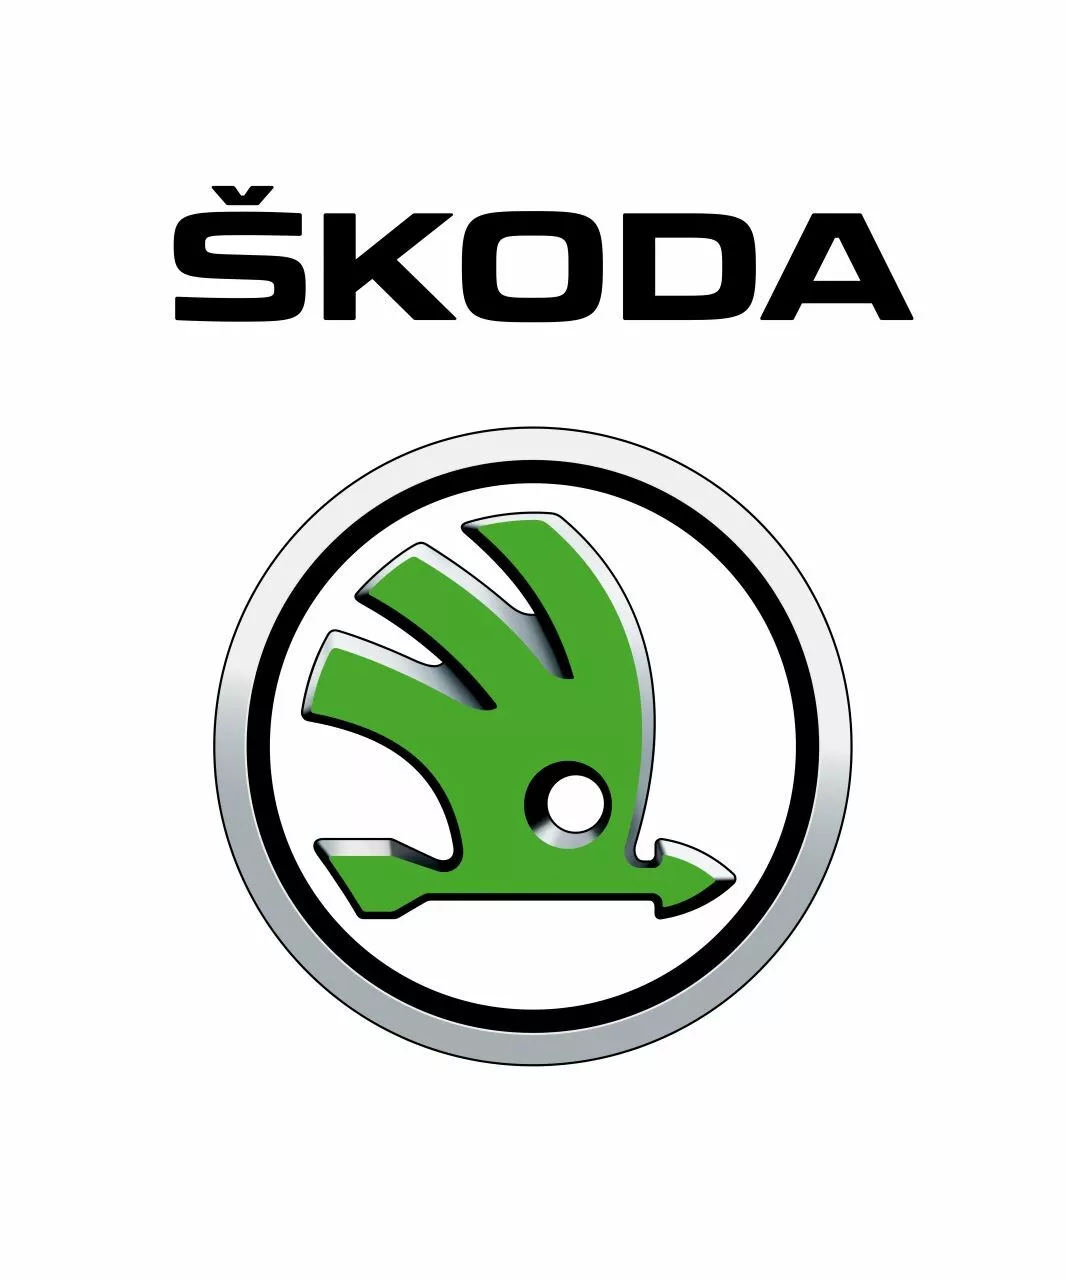 Evolution du logo ŠKODA : plus de 120 ans d'histoire - ŠKODA